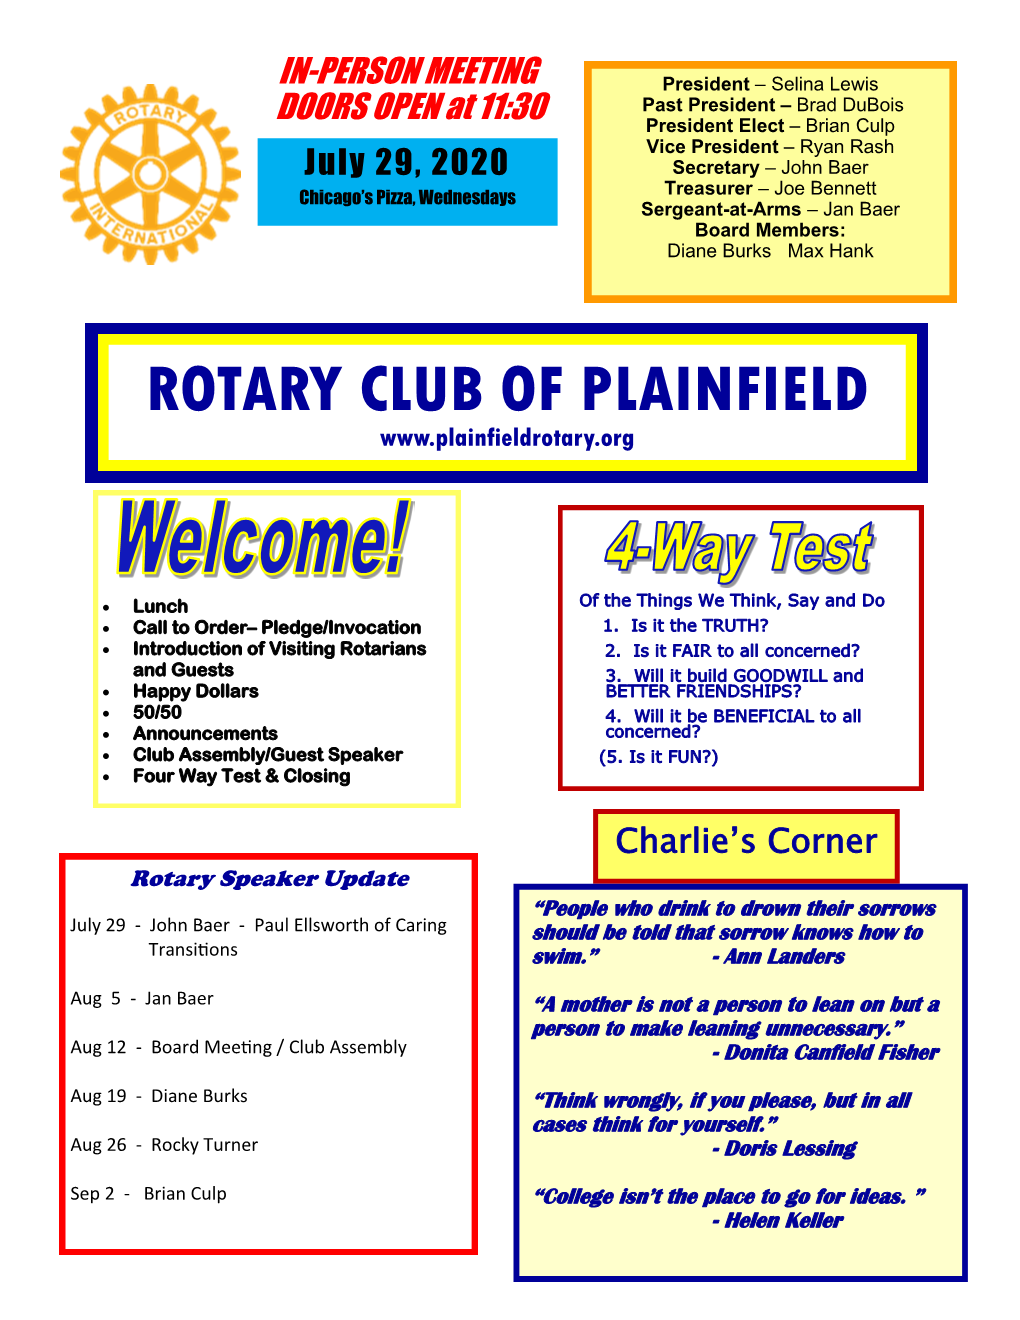 Rotary Club of Plainfield